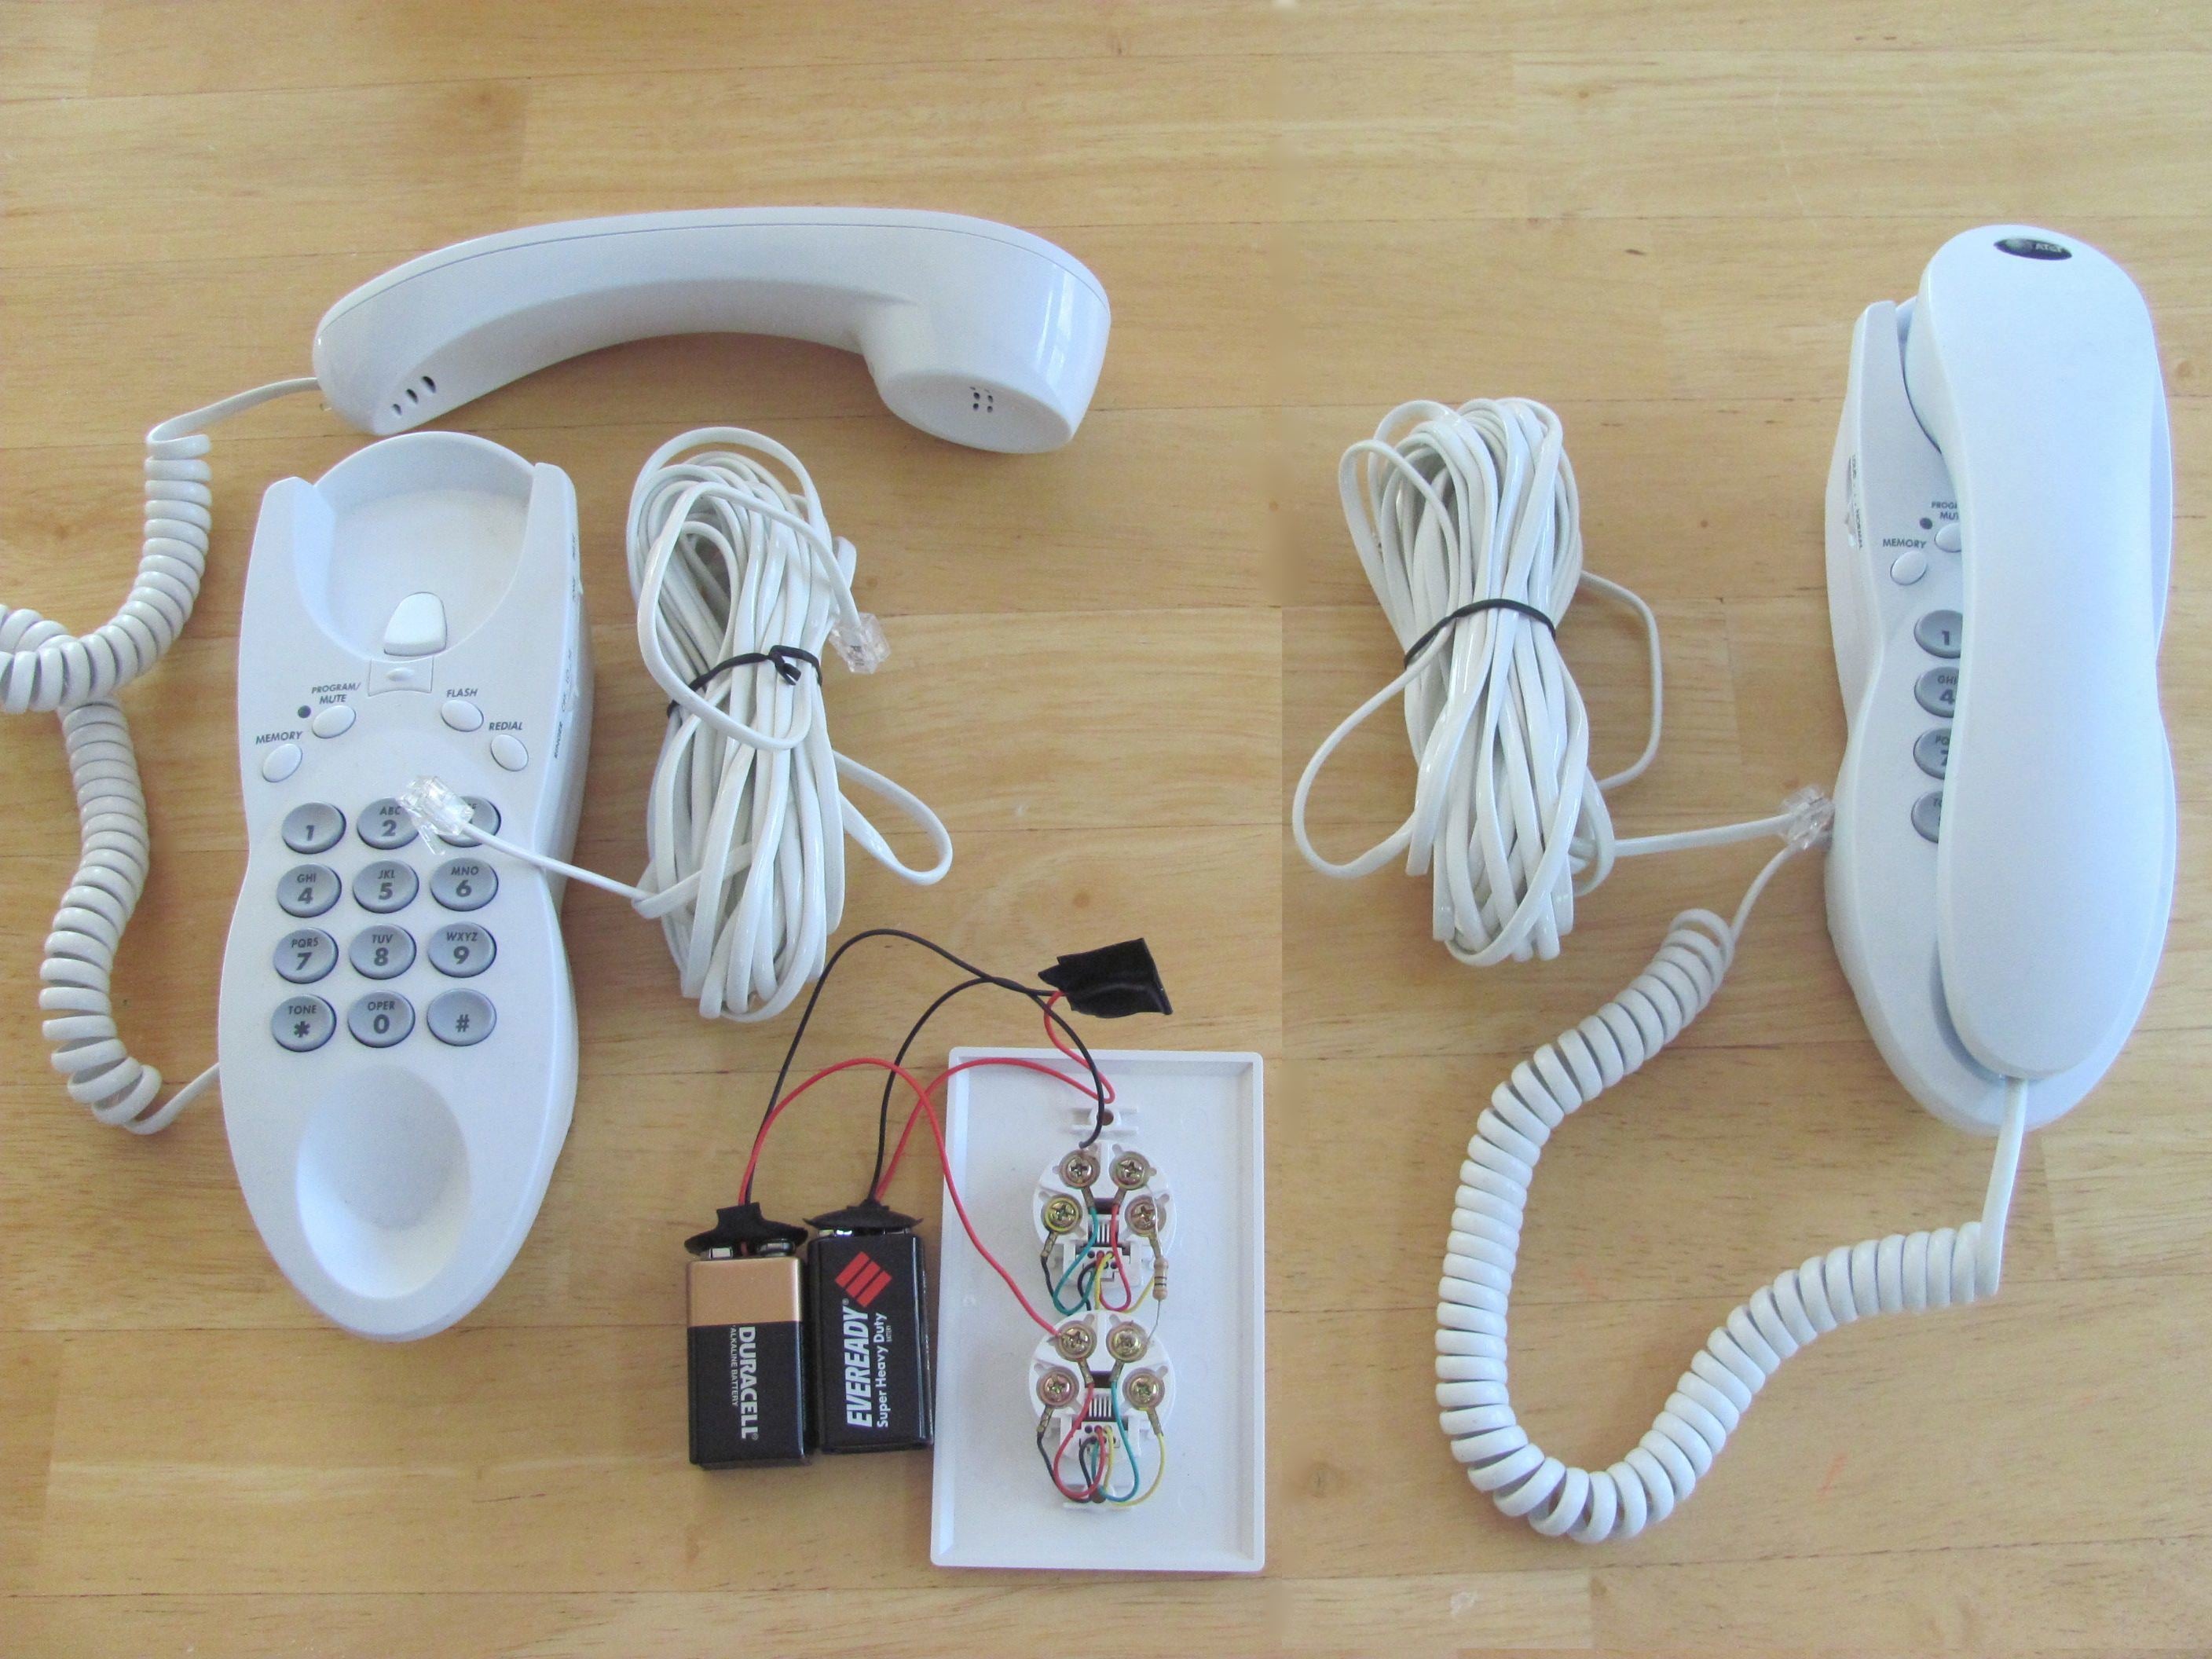 Old Phone Toy Intercom Device